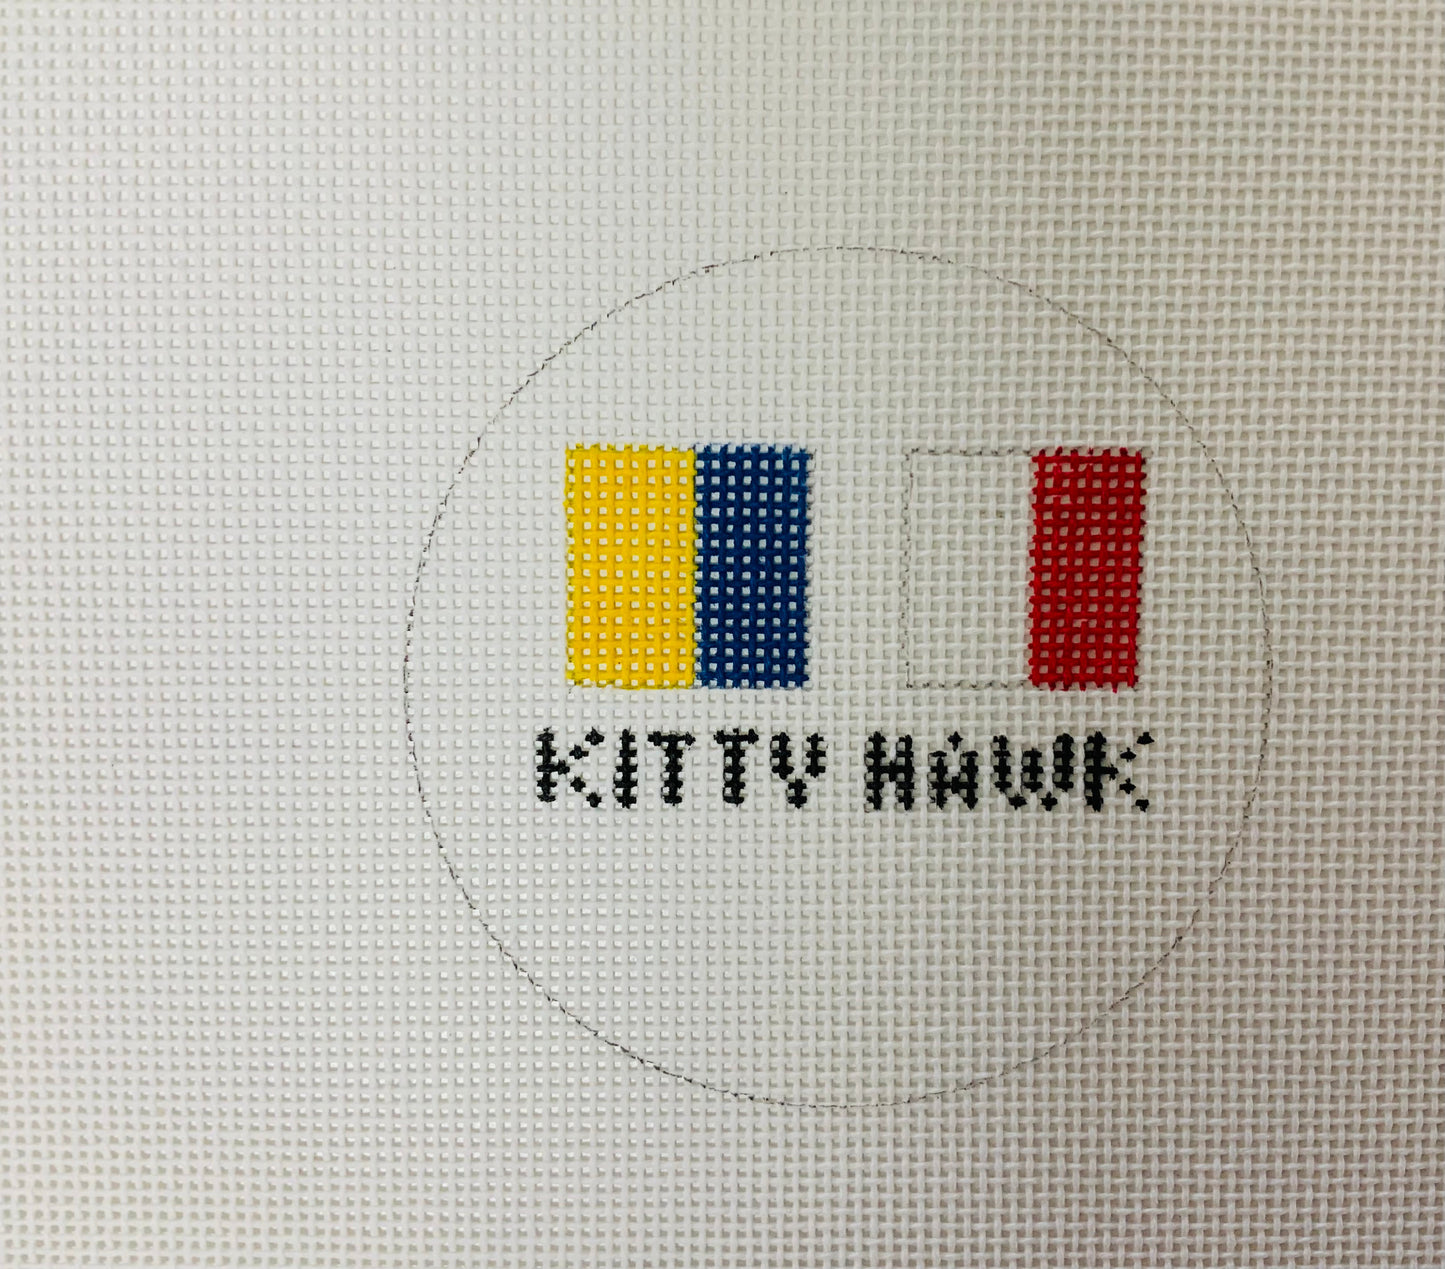 Kitty Hawk Ornament Needlecraft Canvas